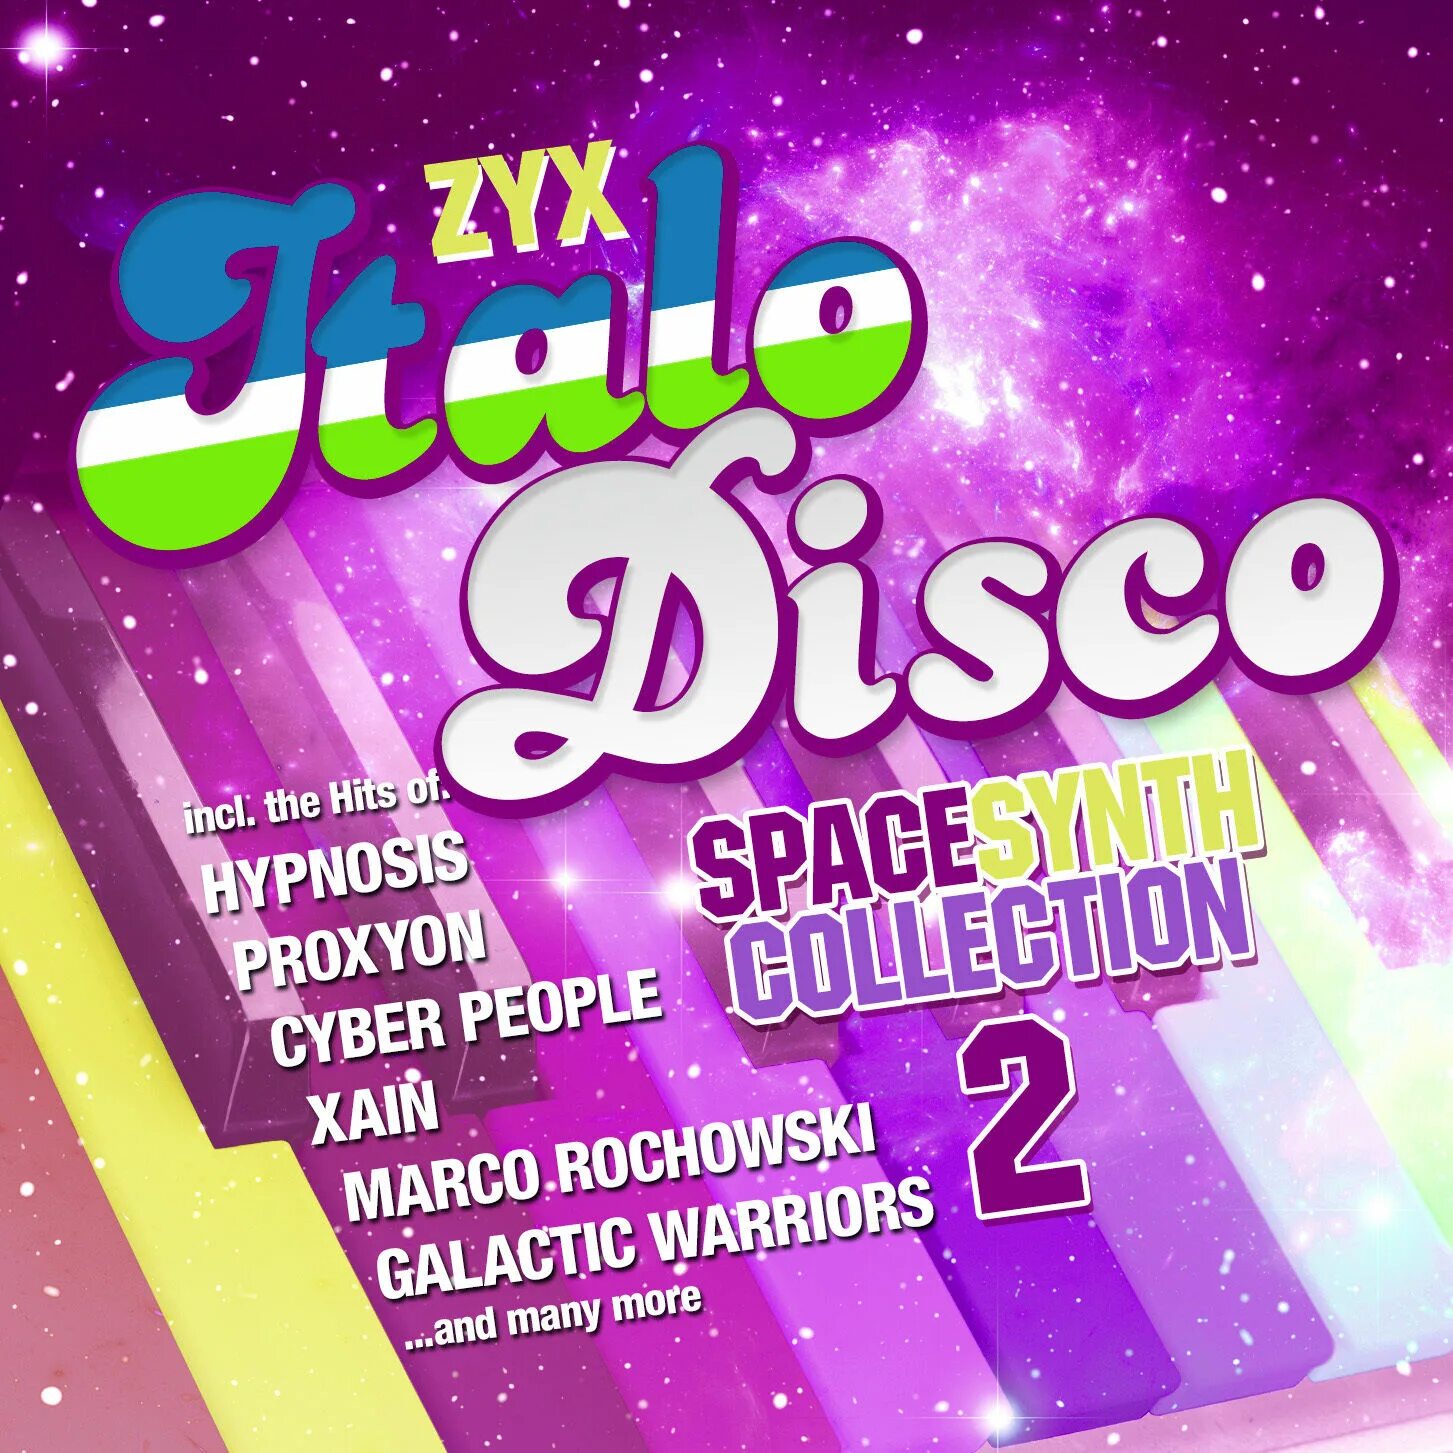 Va - ZYX Italo Disco Spacesynth collection 2. ZYX Italo Disco Spacesynth. ZYX Italo Disco Spacesynth collection CD. 2020 ZYX Italo Disco Spacesynth collection 6.